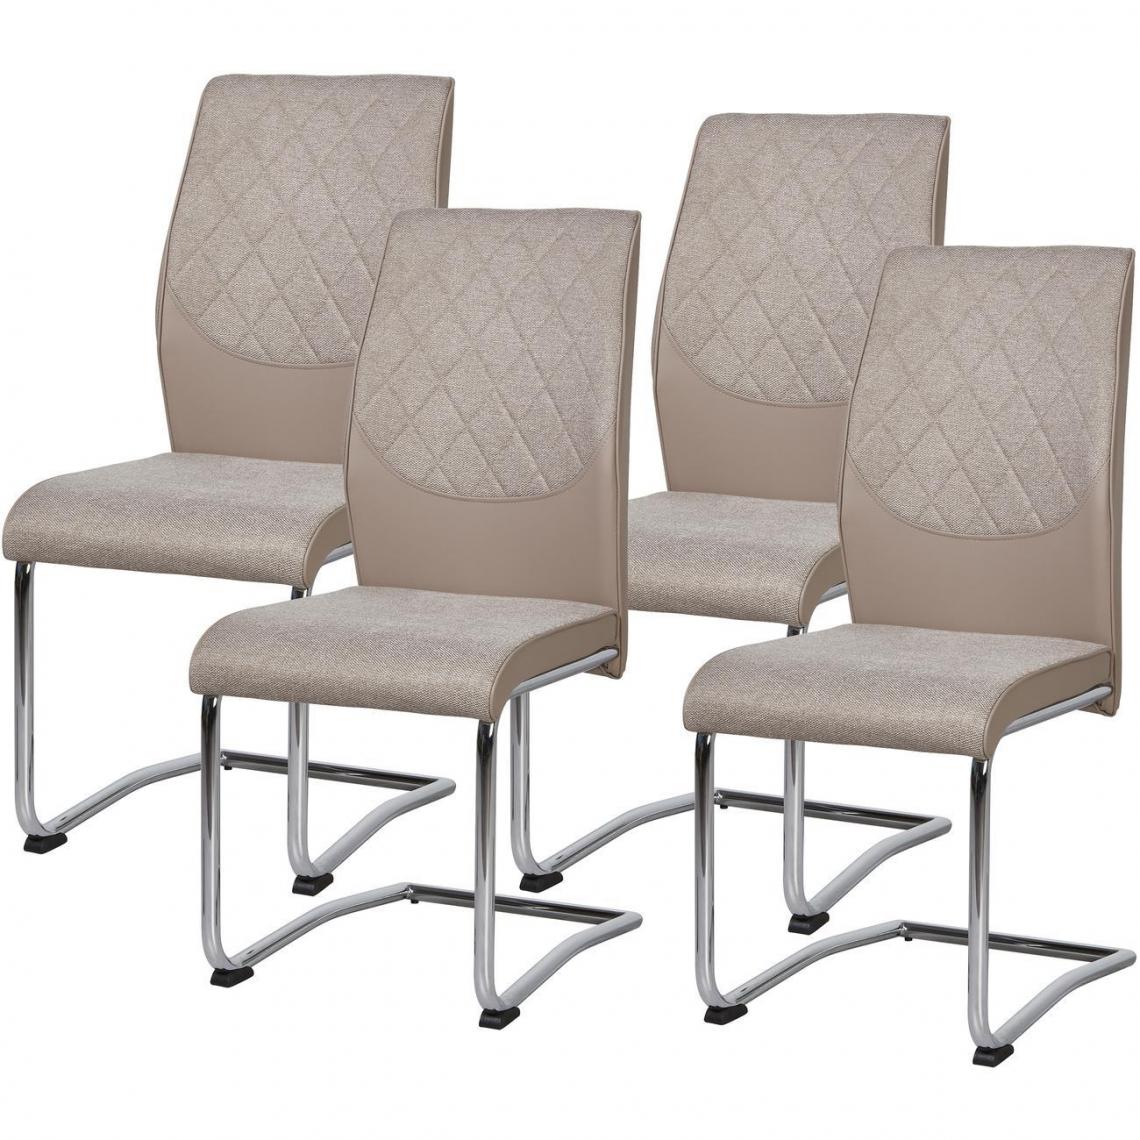 ATHM DESIGN - Lot de 4 - Chaise SWINTON Taupe - assise Tissu et Cuir PU pieds Metal - Chaises